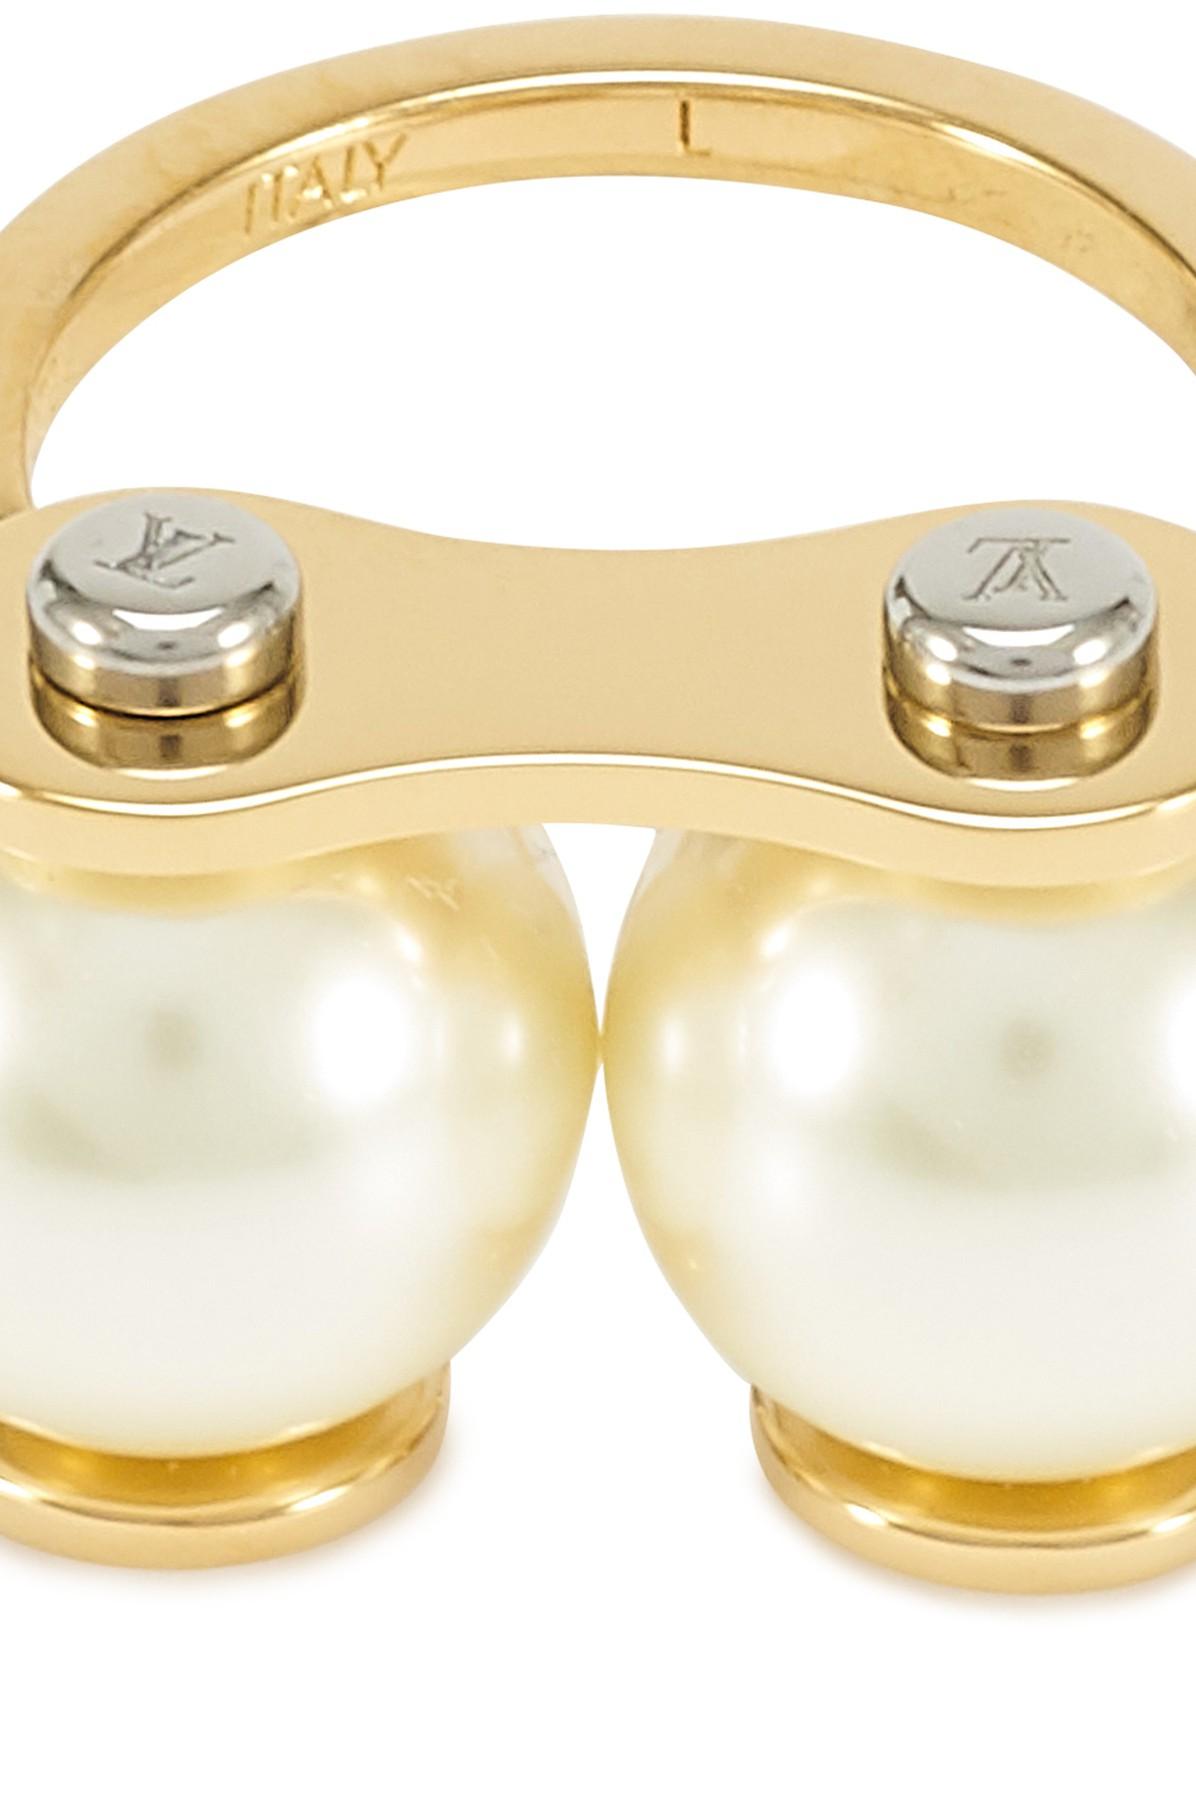 Louis Vuitton Speedy Pearls M68086 Gold Plated Faux Pearl Earrings